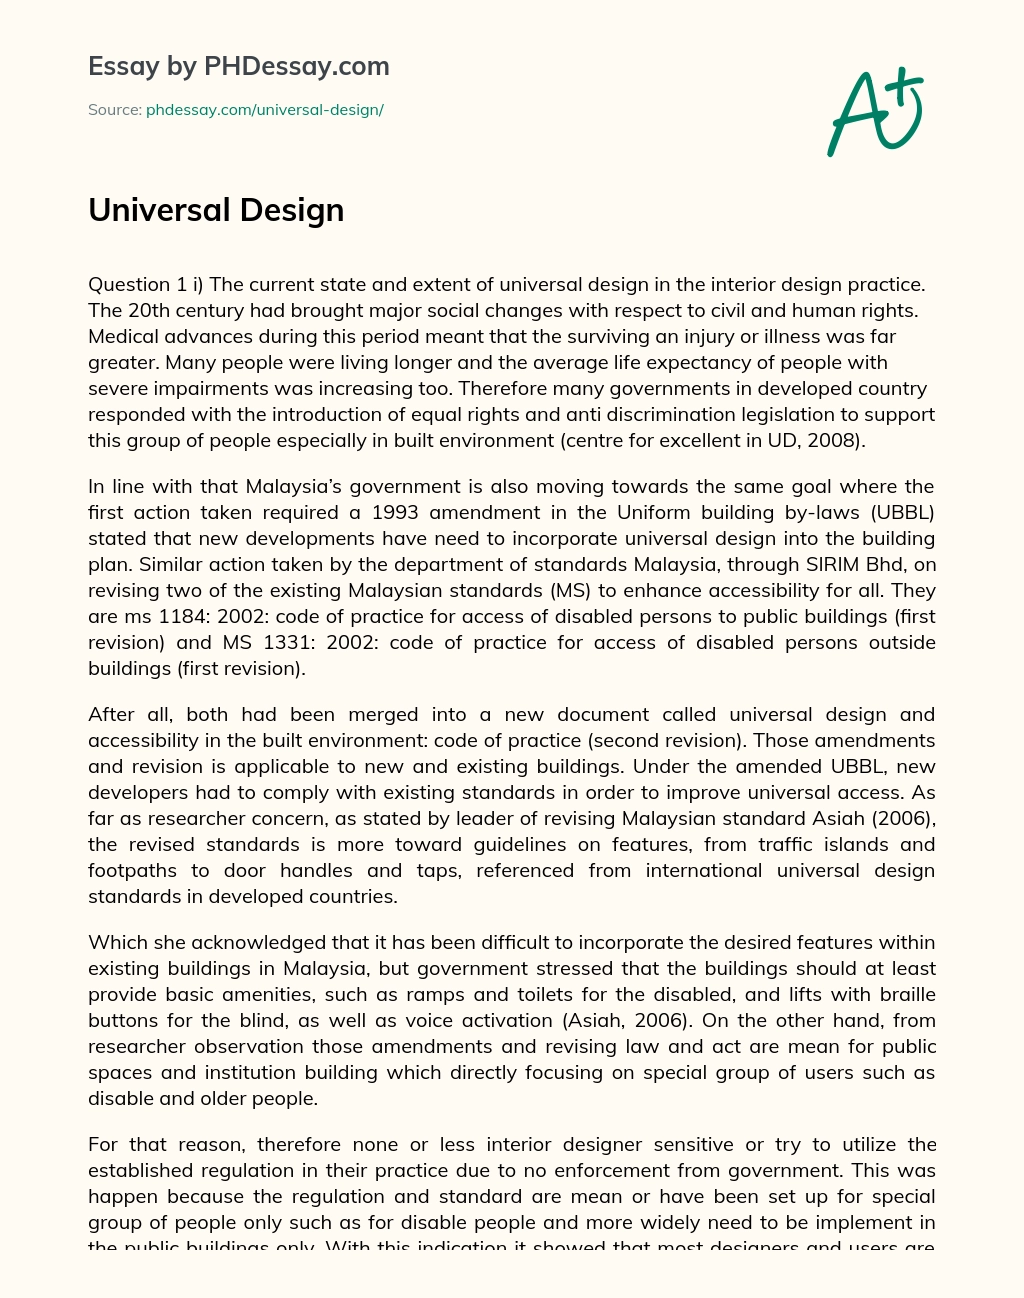 Universal Design essay